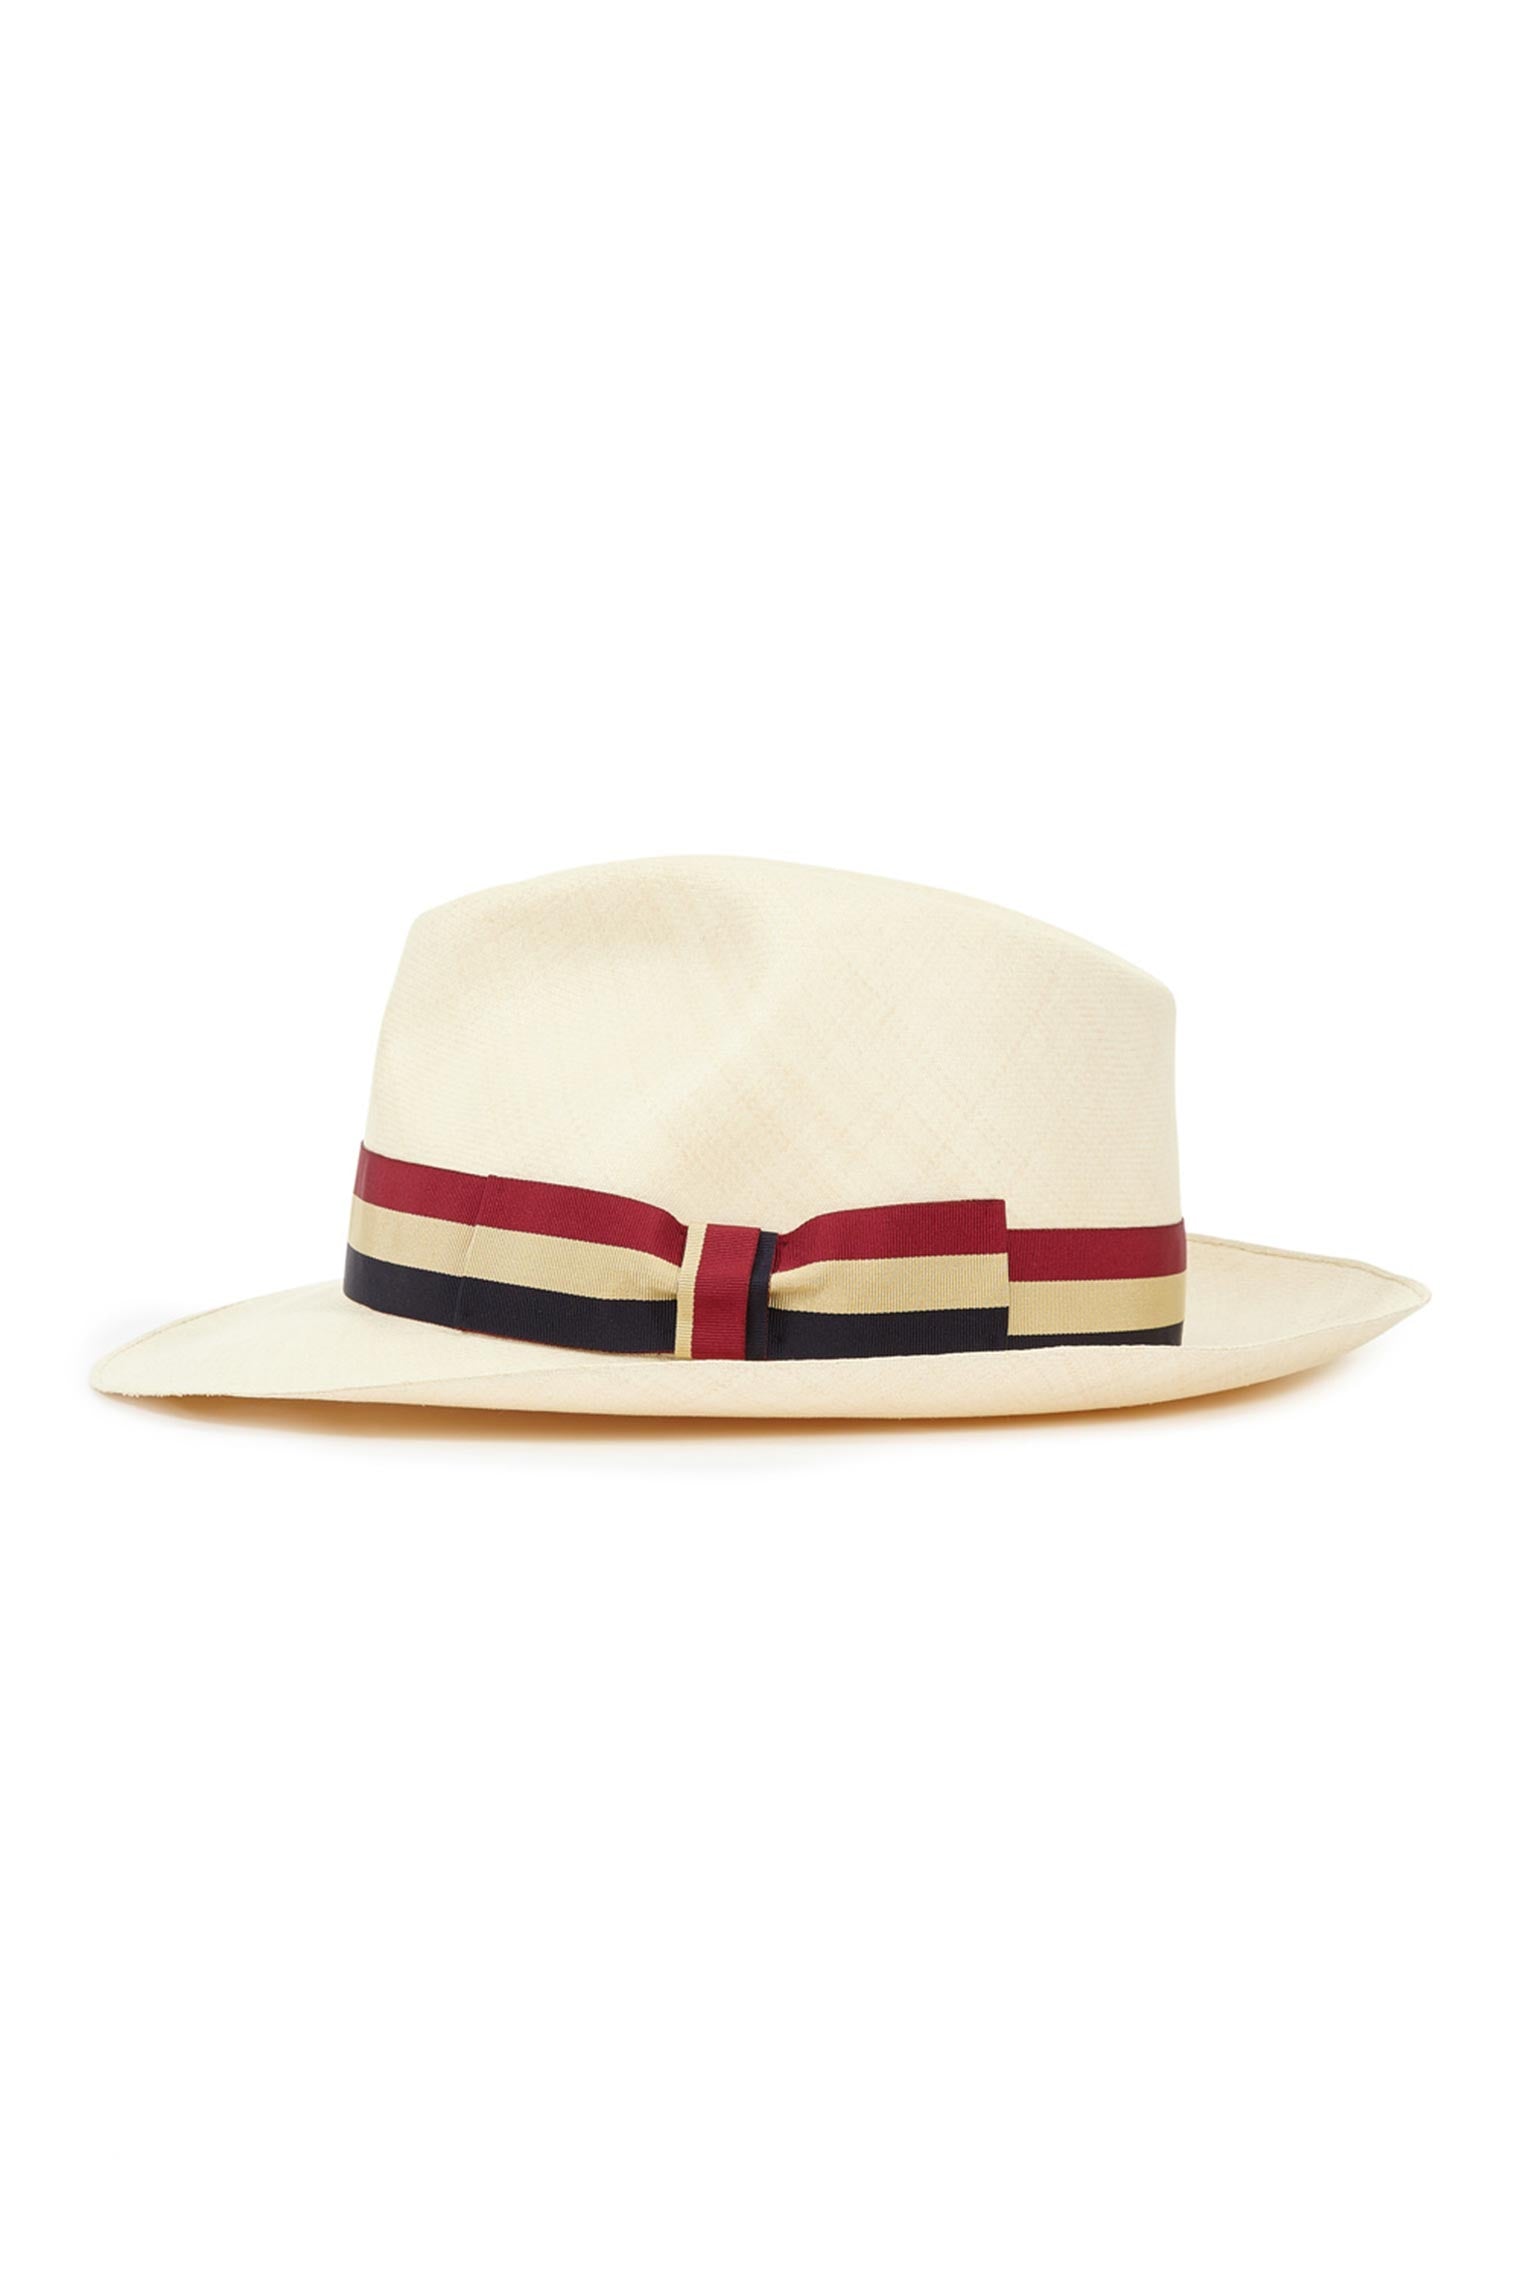 Mens Hats - Luxury Hats for Men - Lock & Co. Hatters UK Page 2